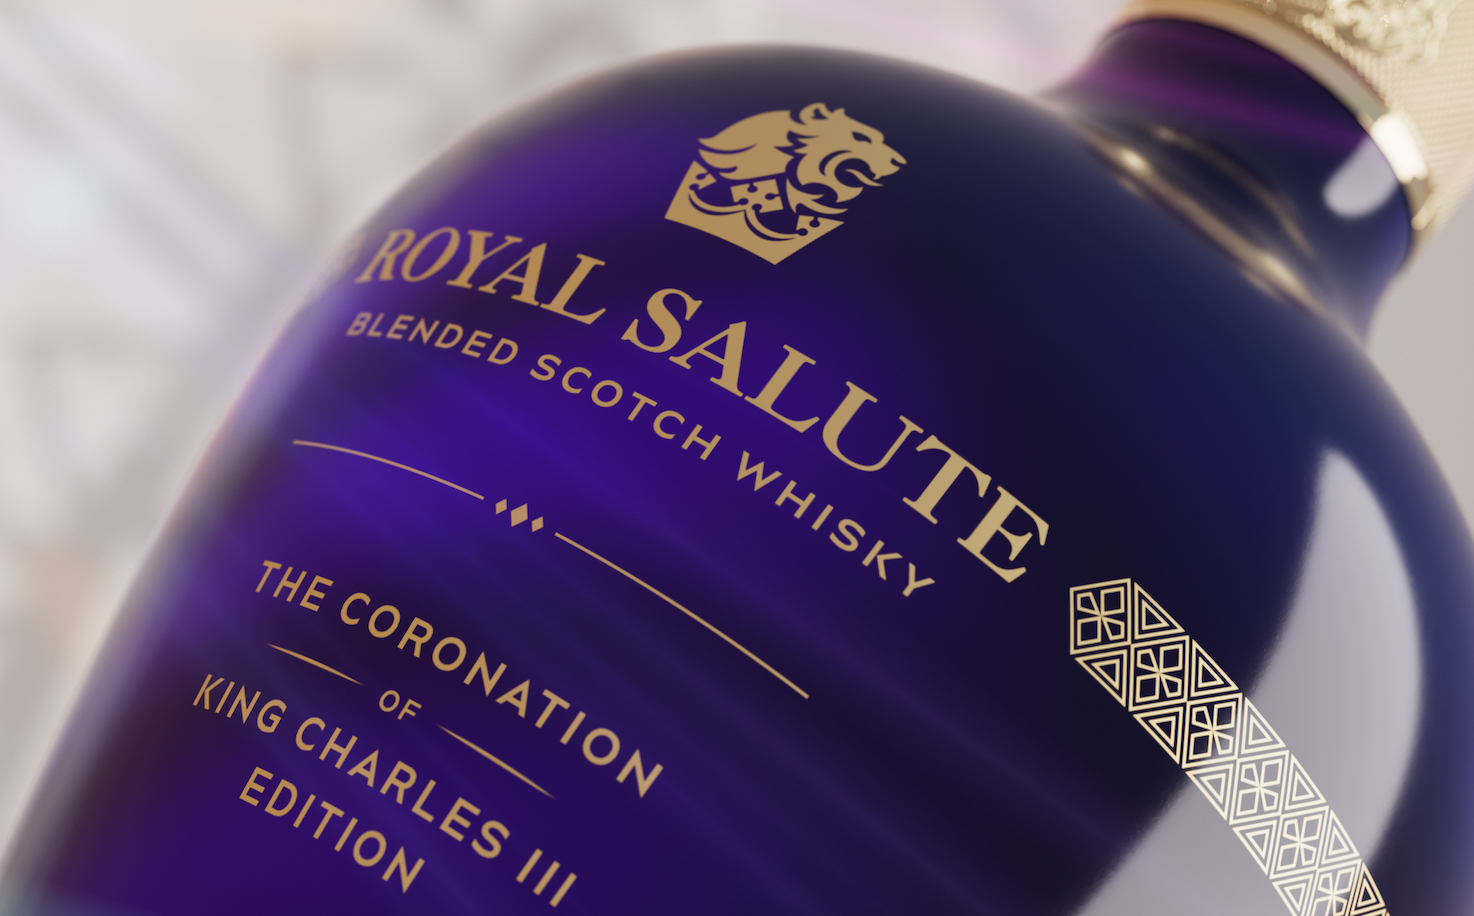 ROYAL SALUTE THE CORONATION OF KING CHARLES III EDITION Beauty shot bottle close up 16x9 1